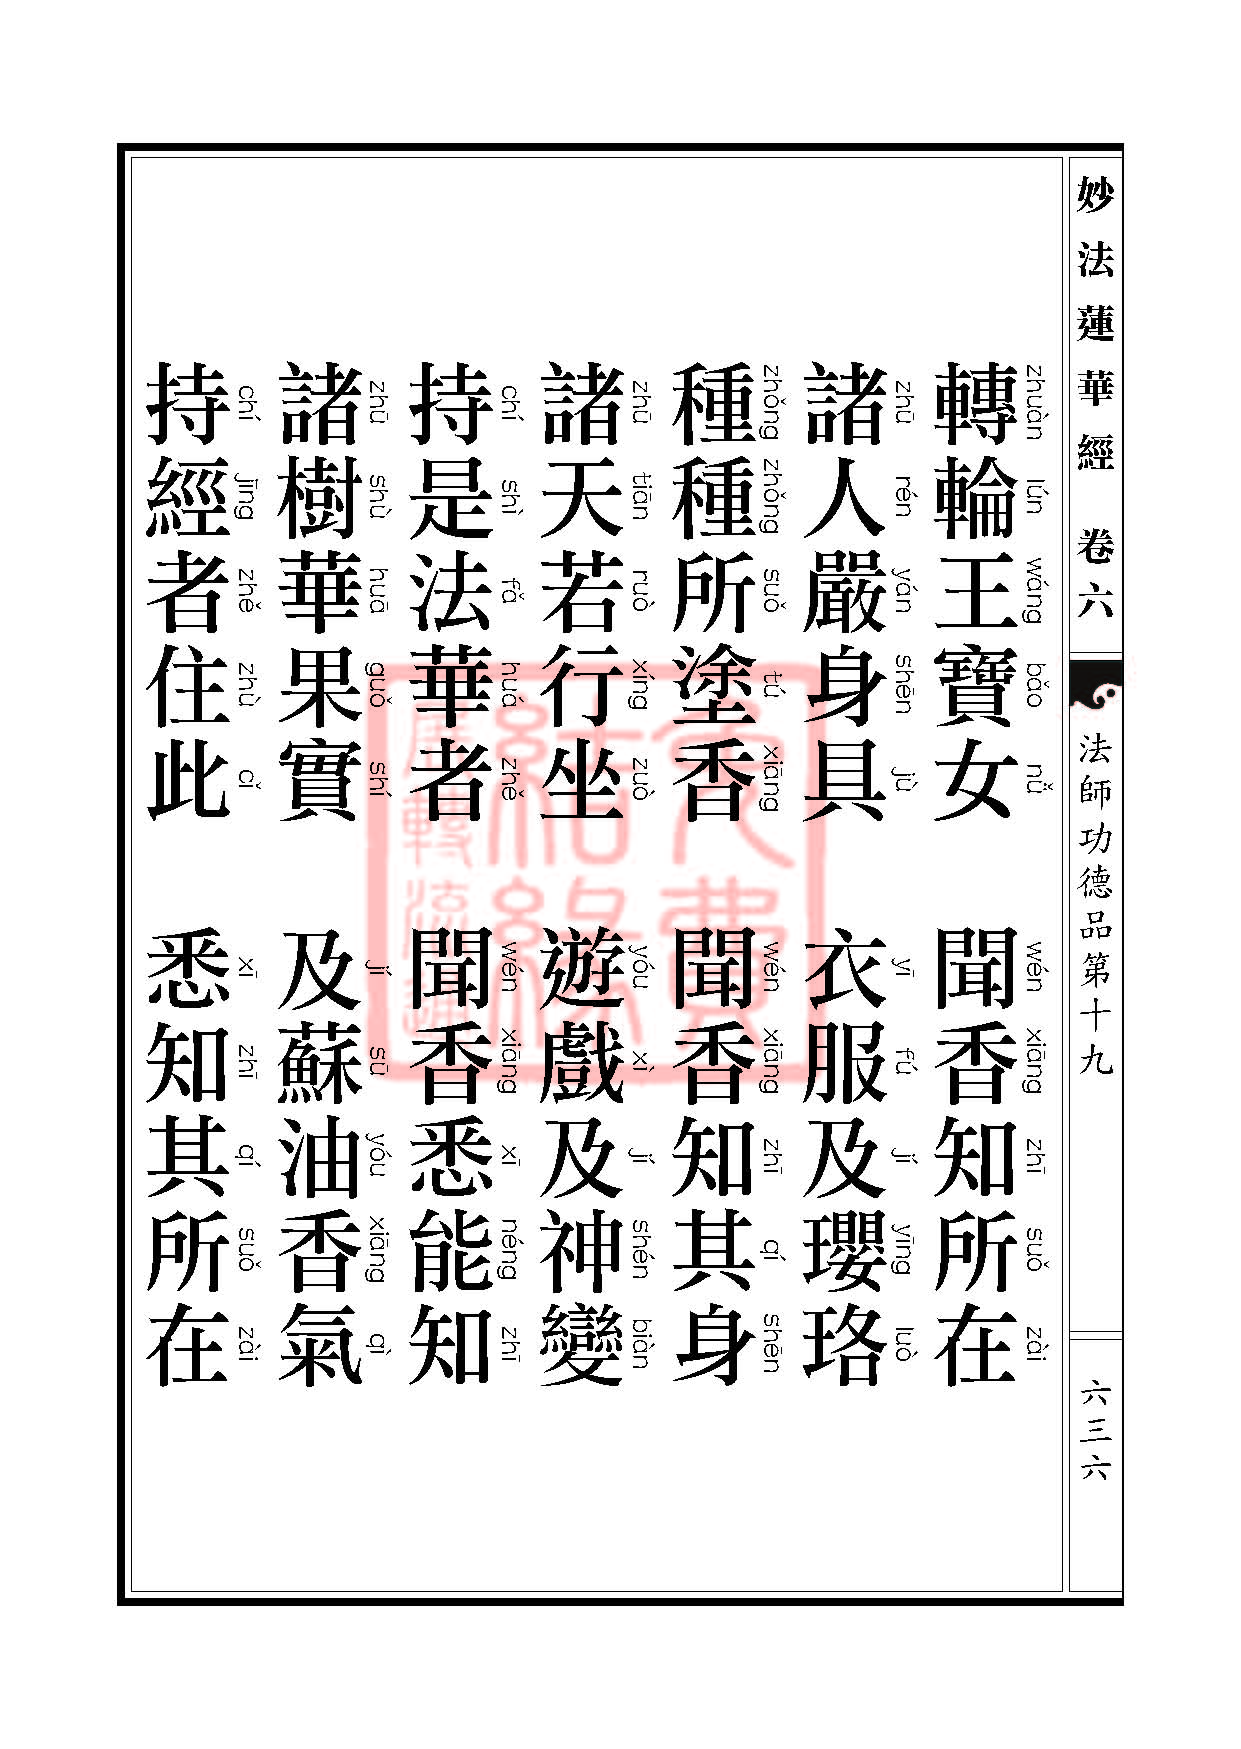 Book_FHJ_HK-A6-PY_Web__636.jpg